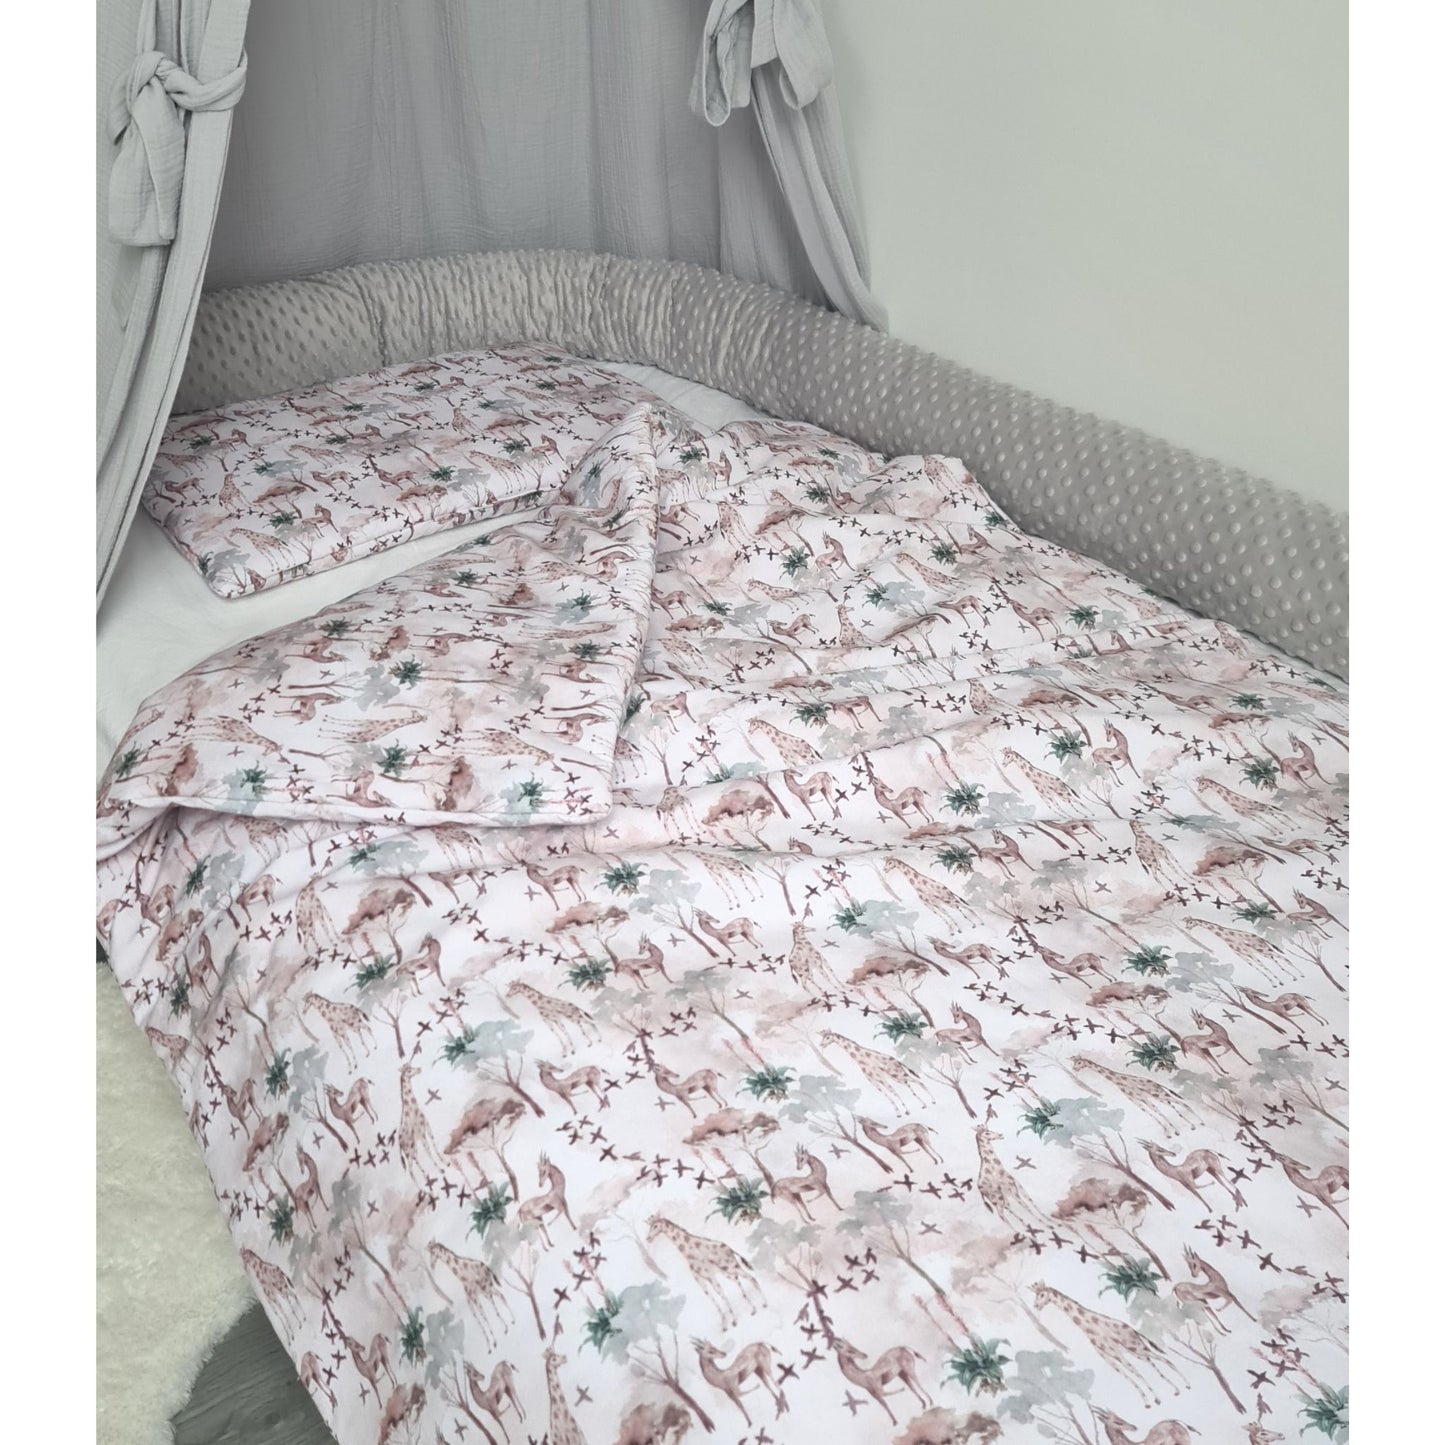 kids bedding sets with safari pattern 100% cotton